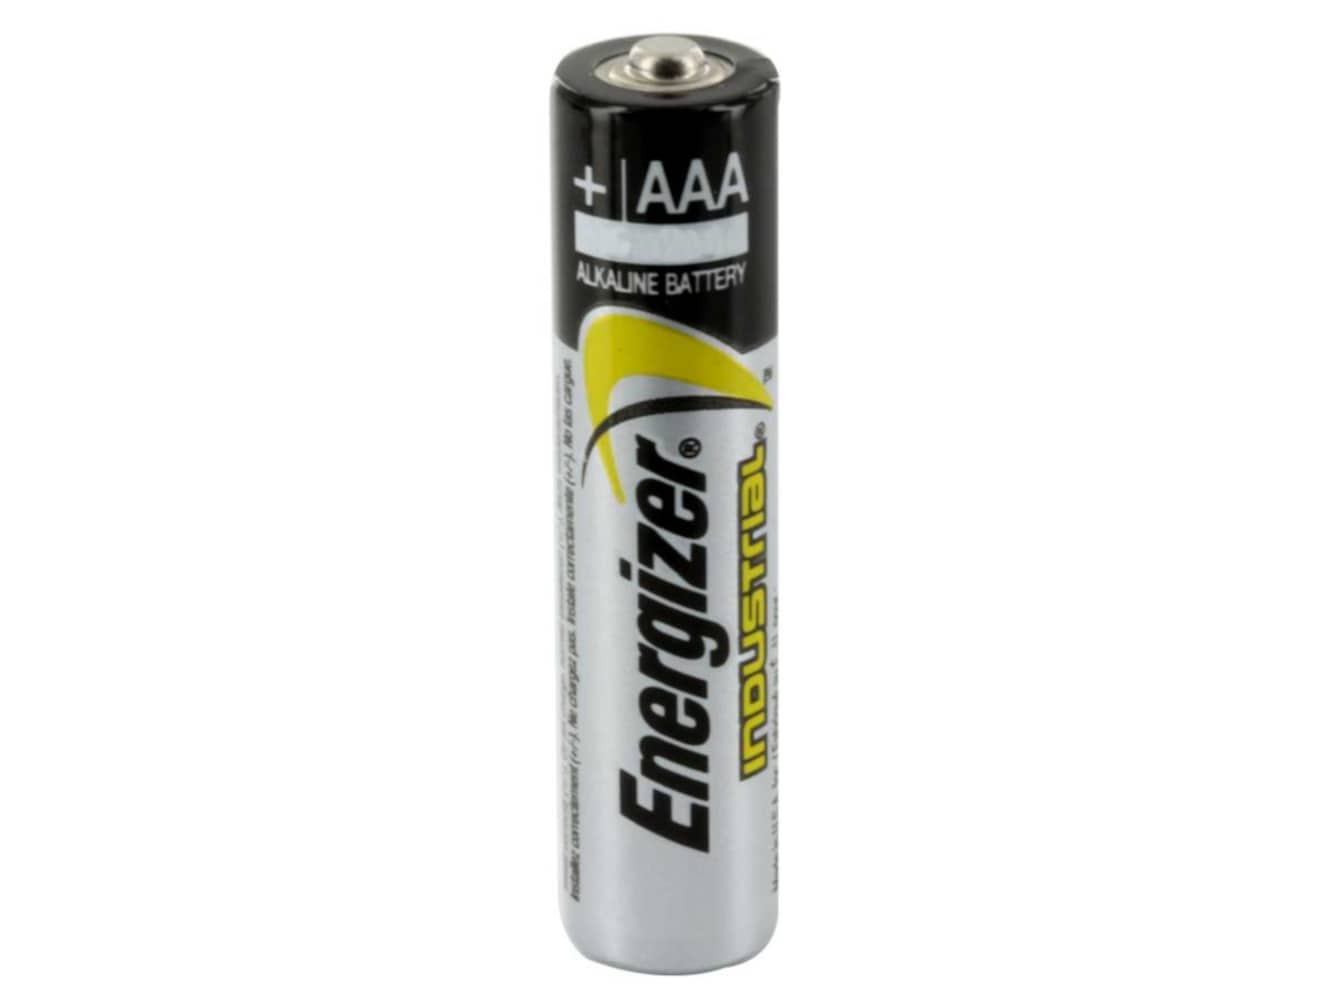 DieHard 16 AAA Batteries